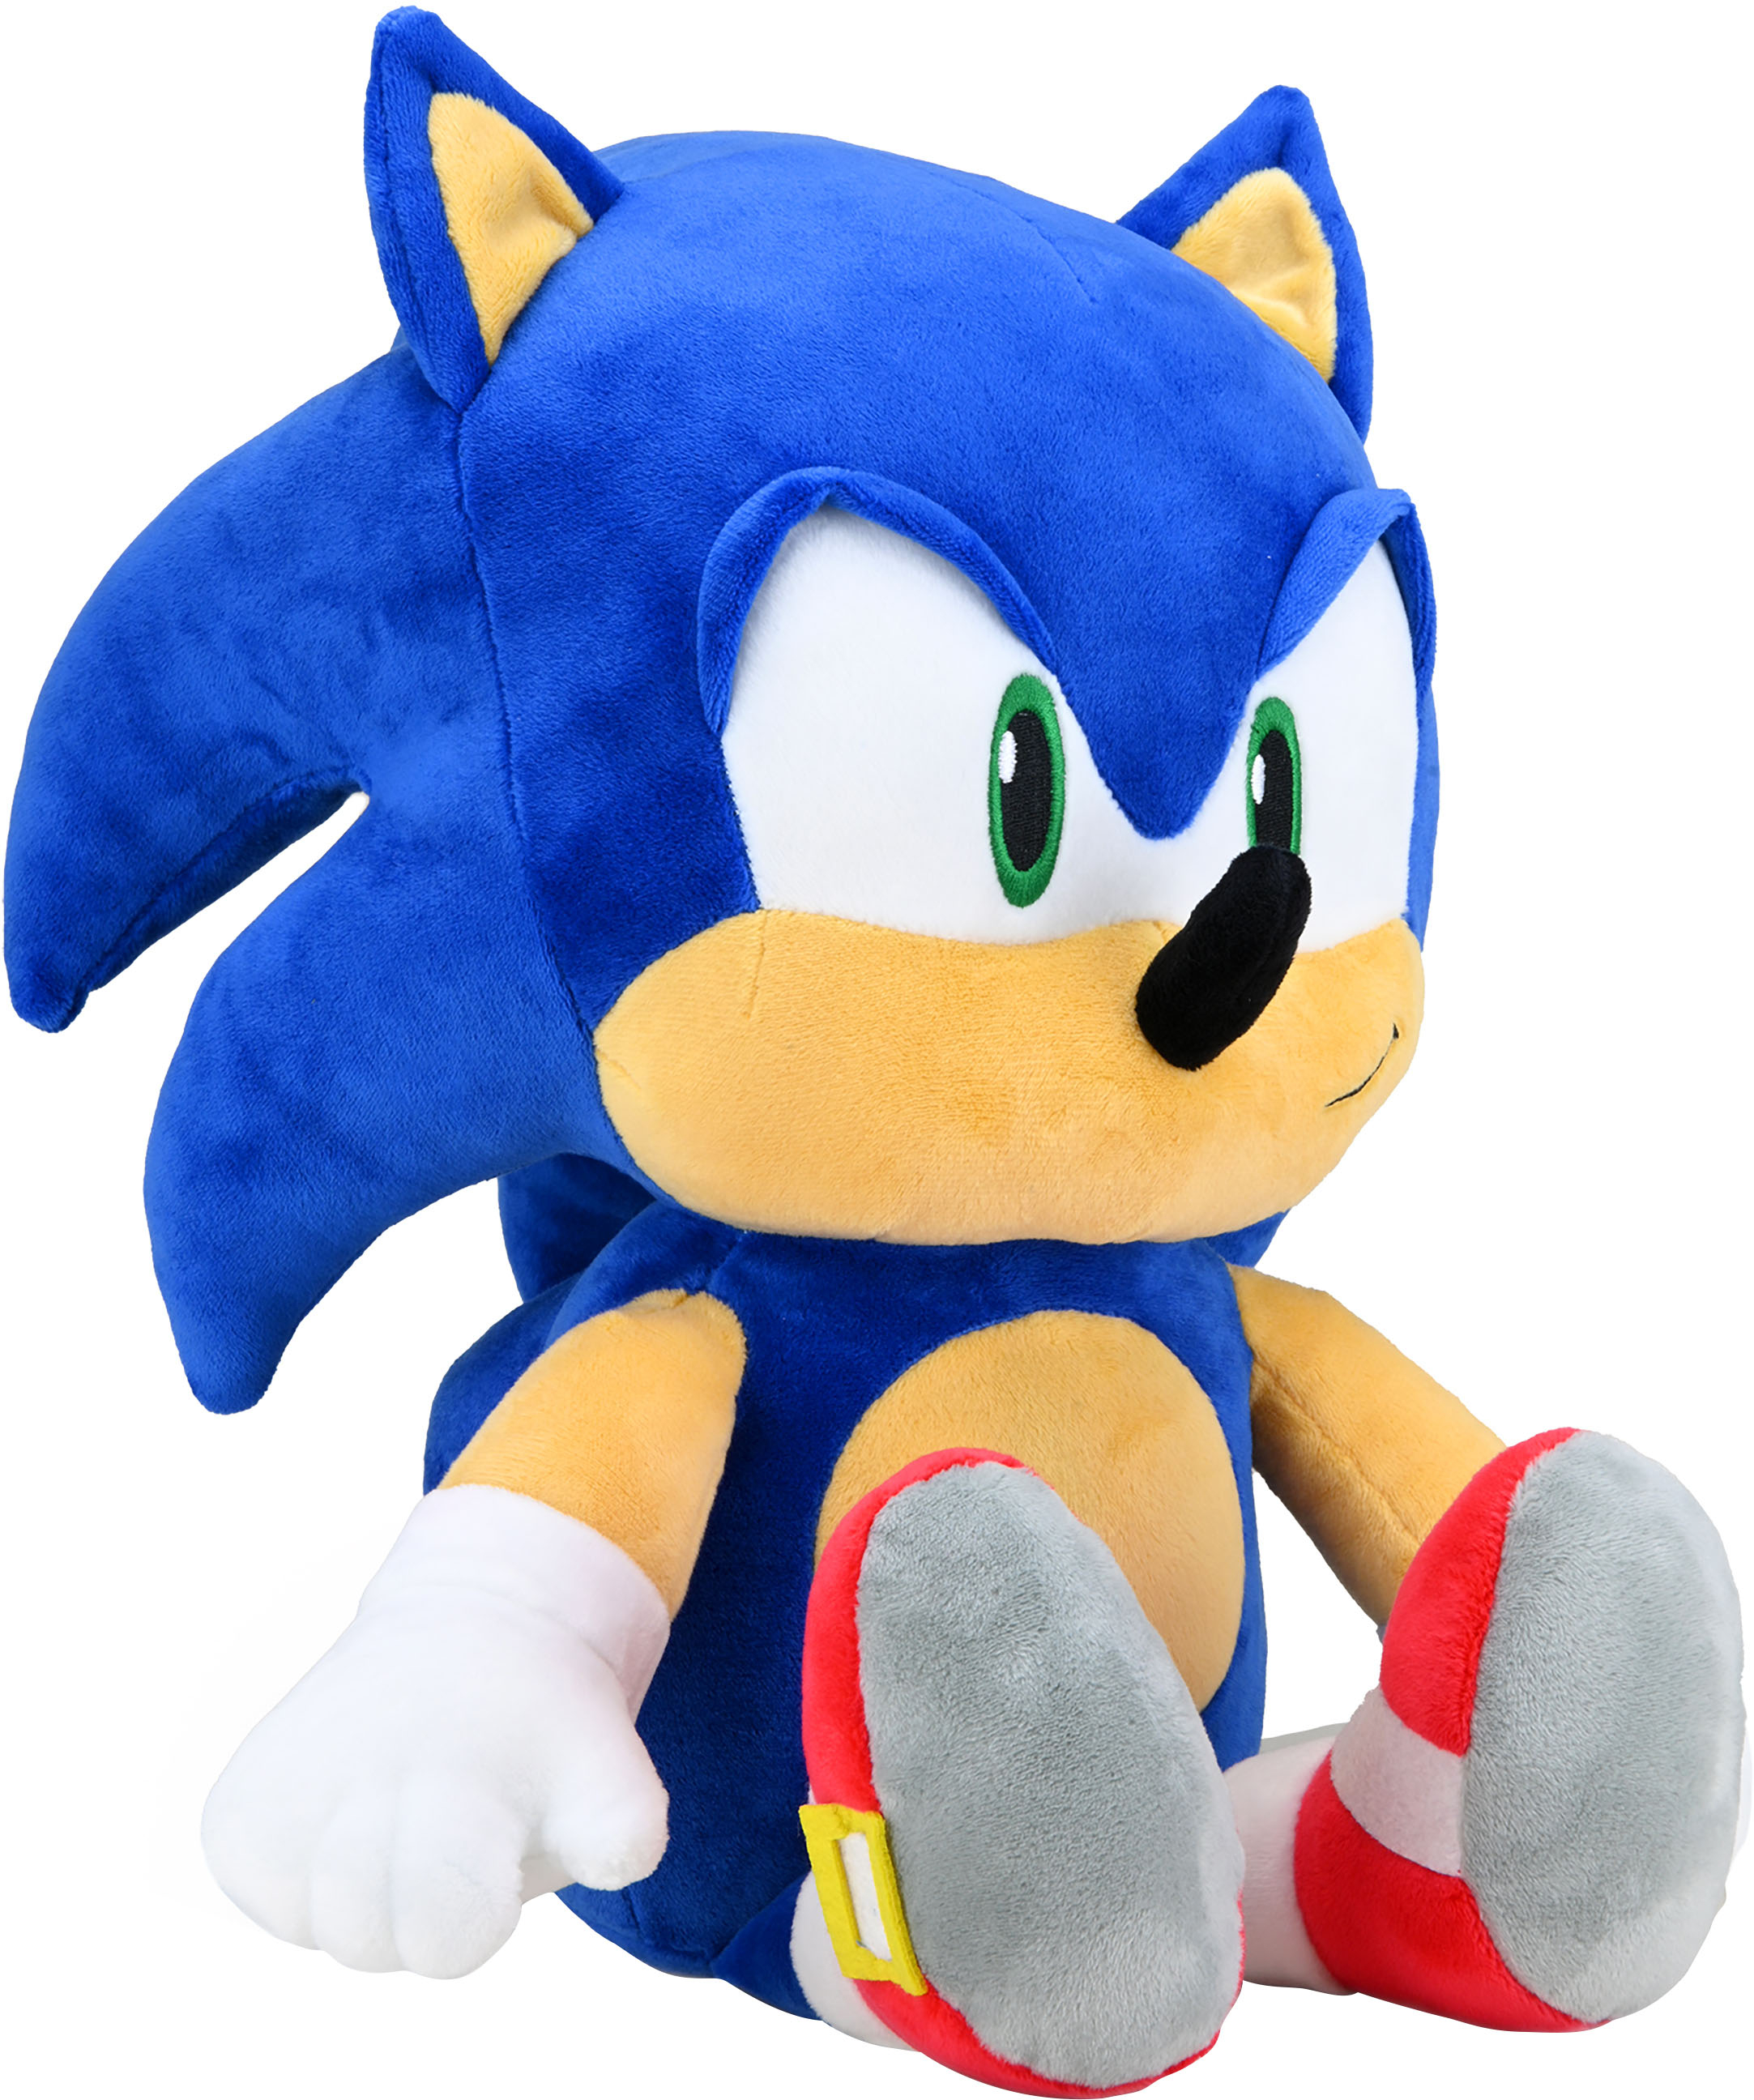 Sonic the Hedgehog - Super Sonic 7.5 Phunny Plush